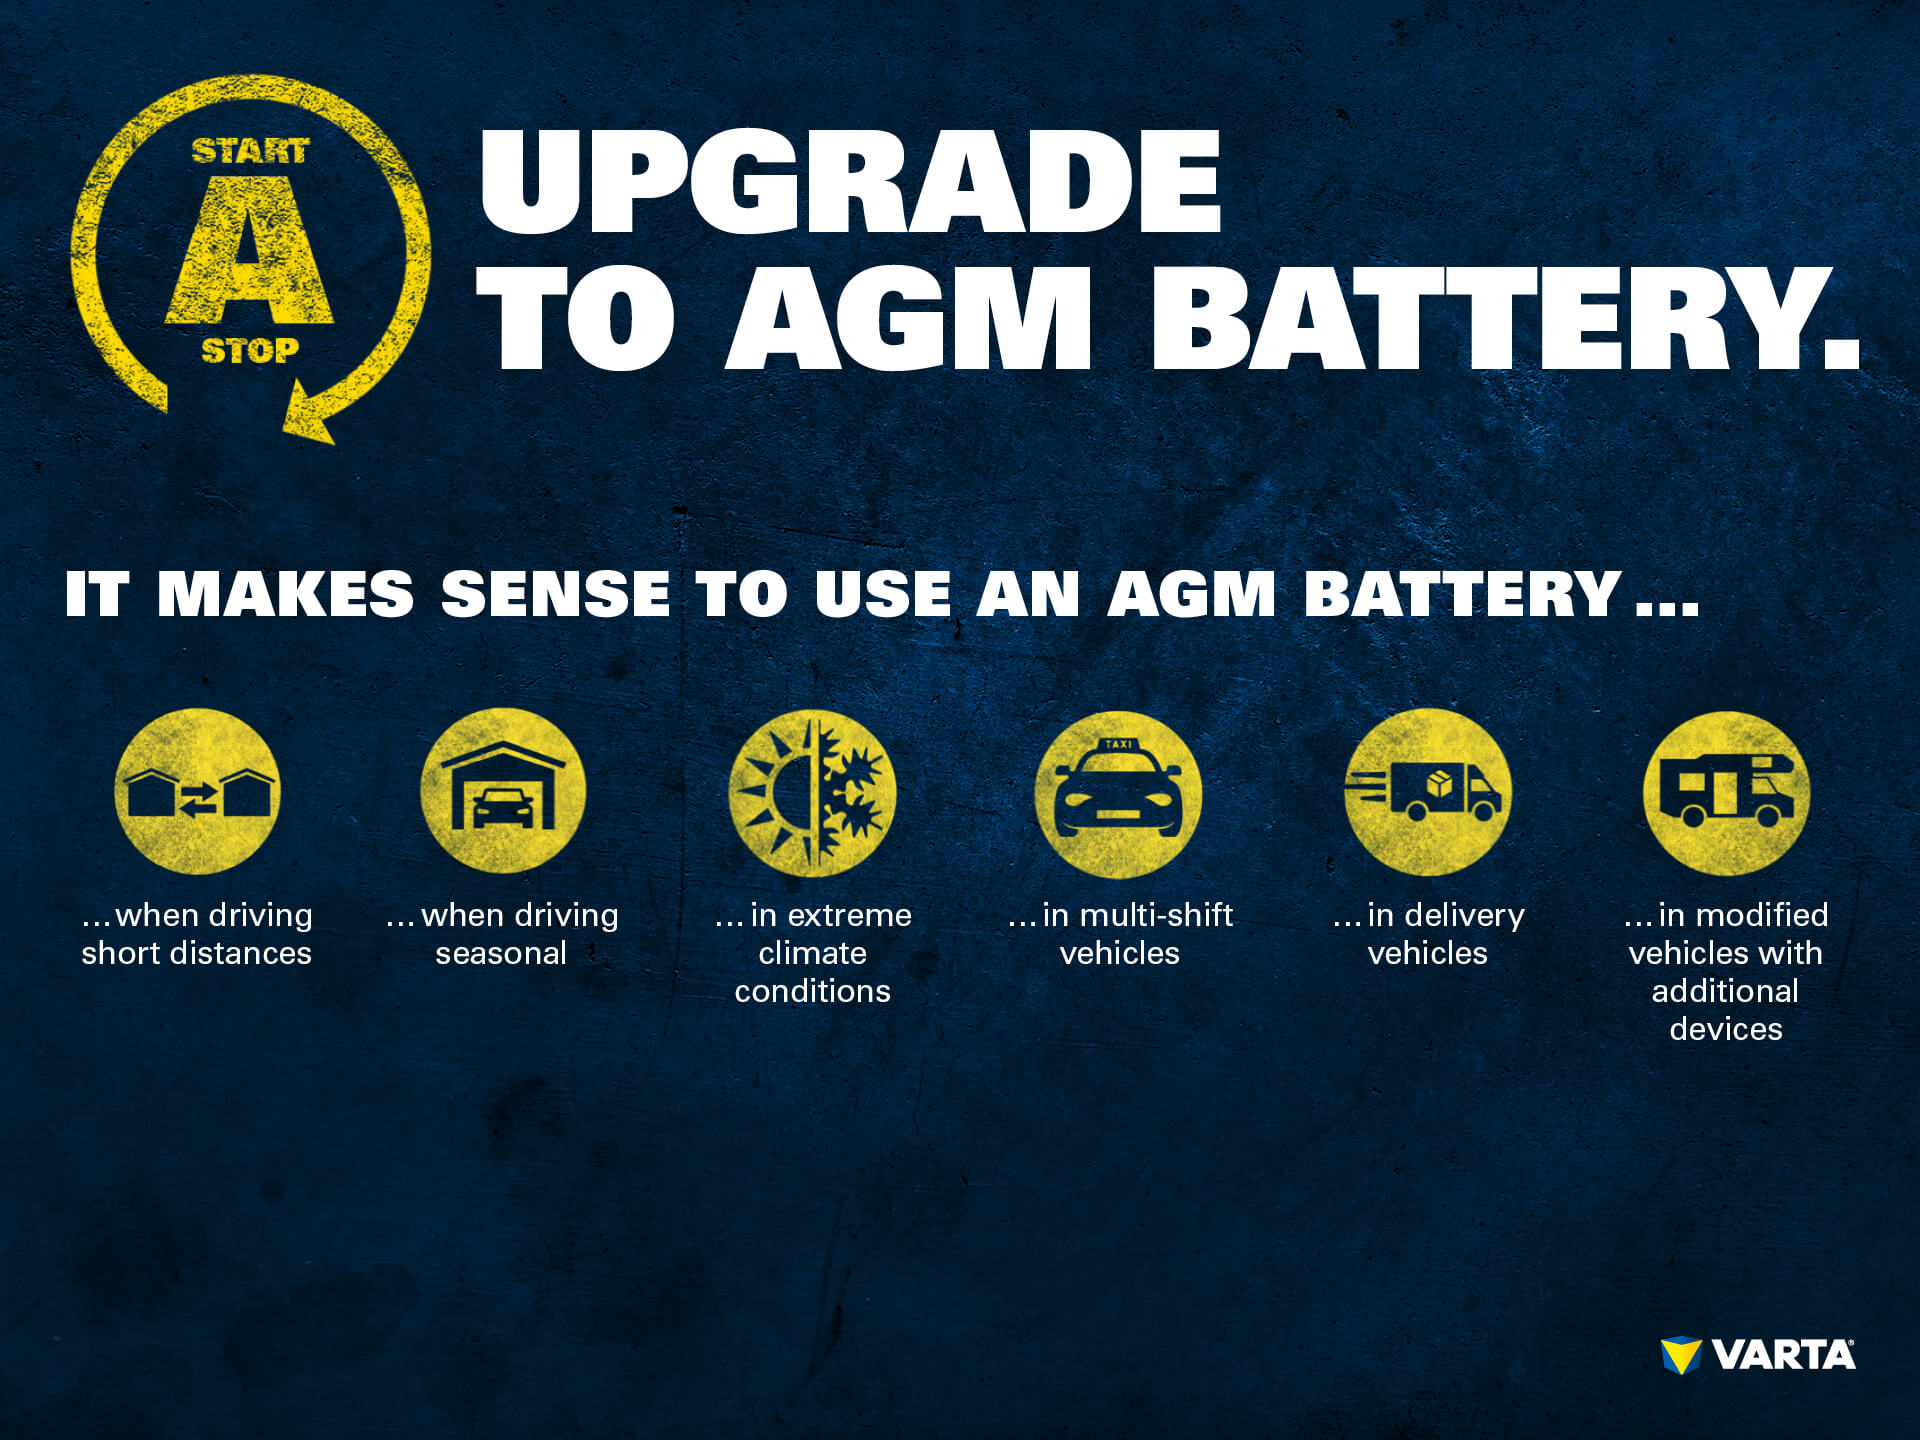 AGM battery updgrade reasons